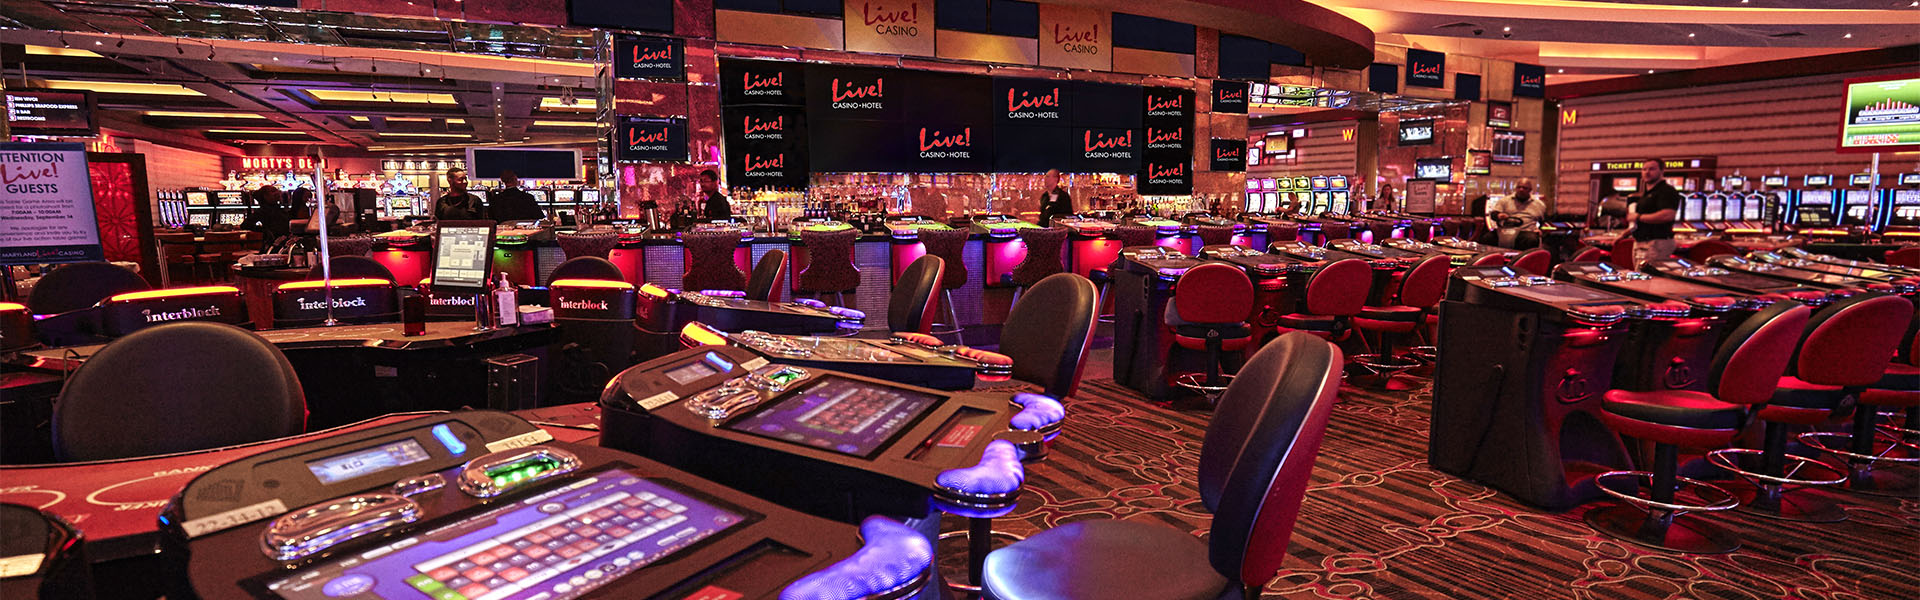 maryland live casino online gambling